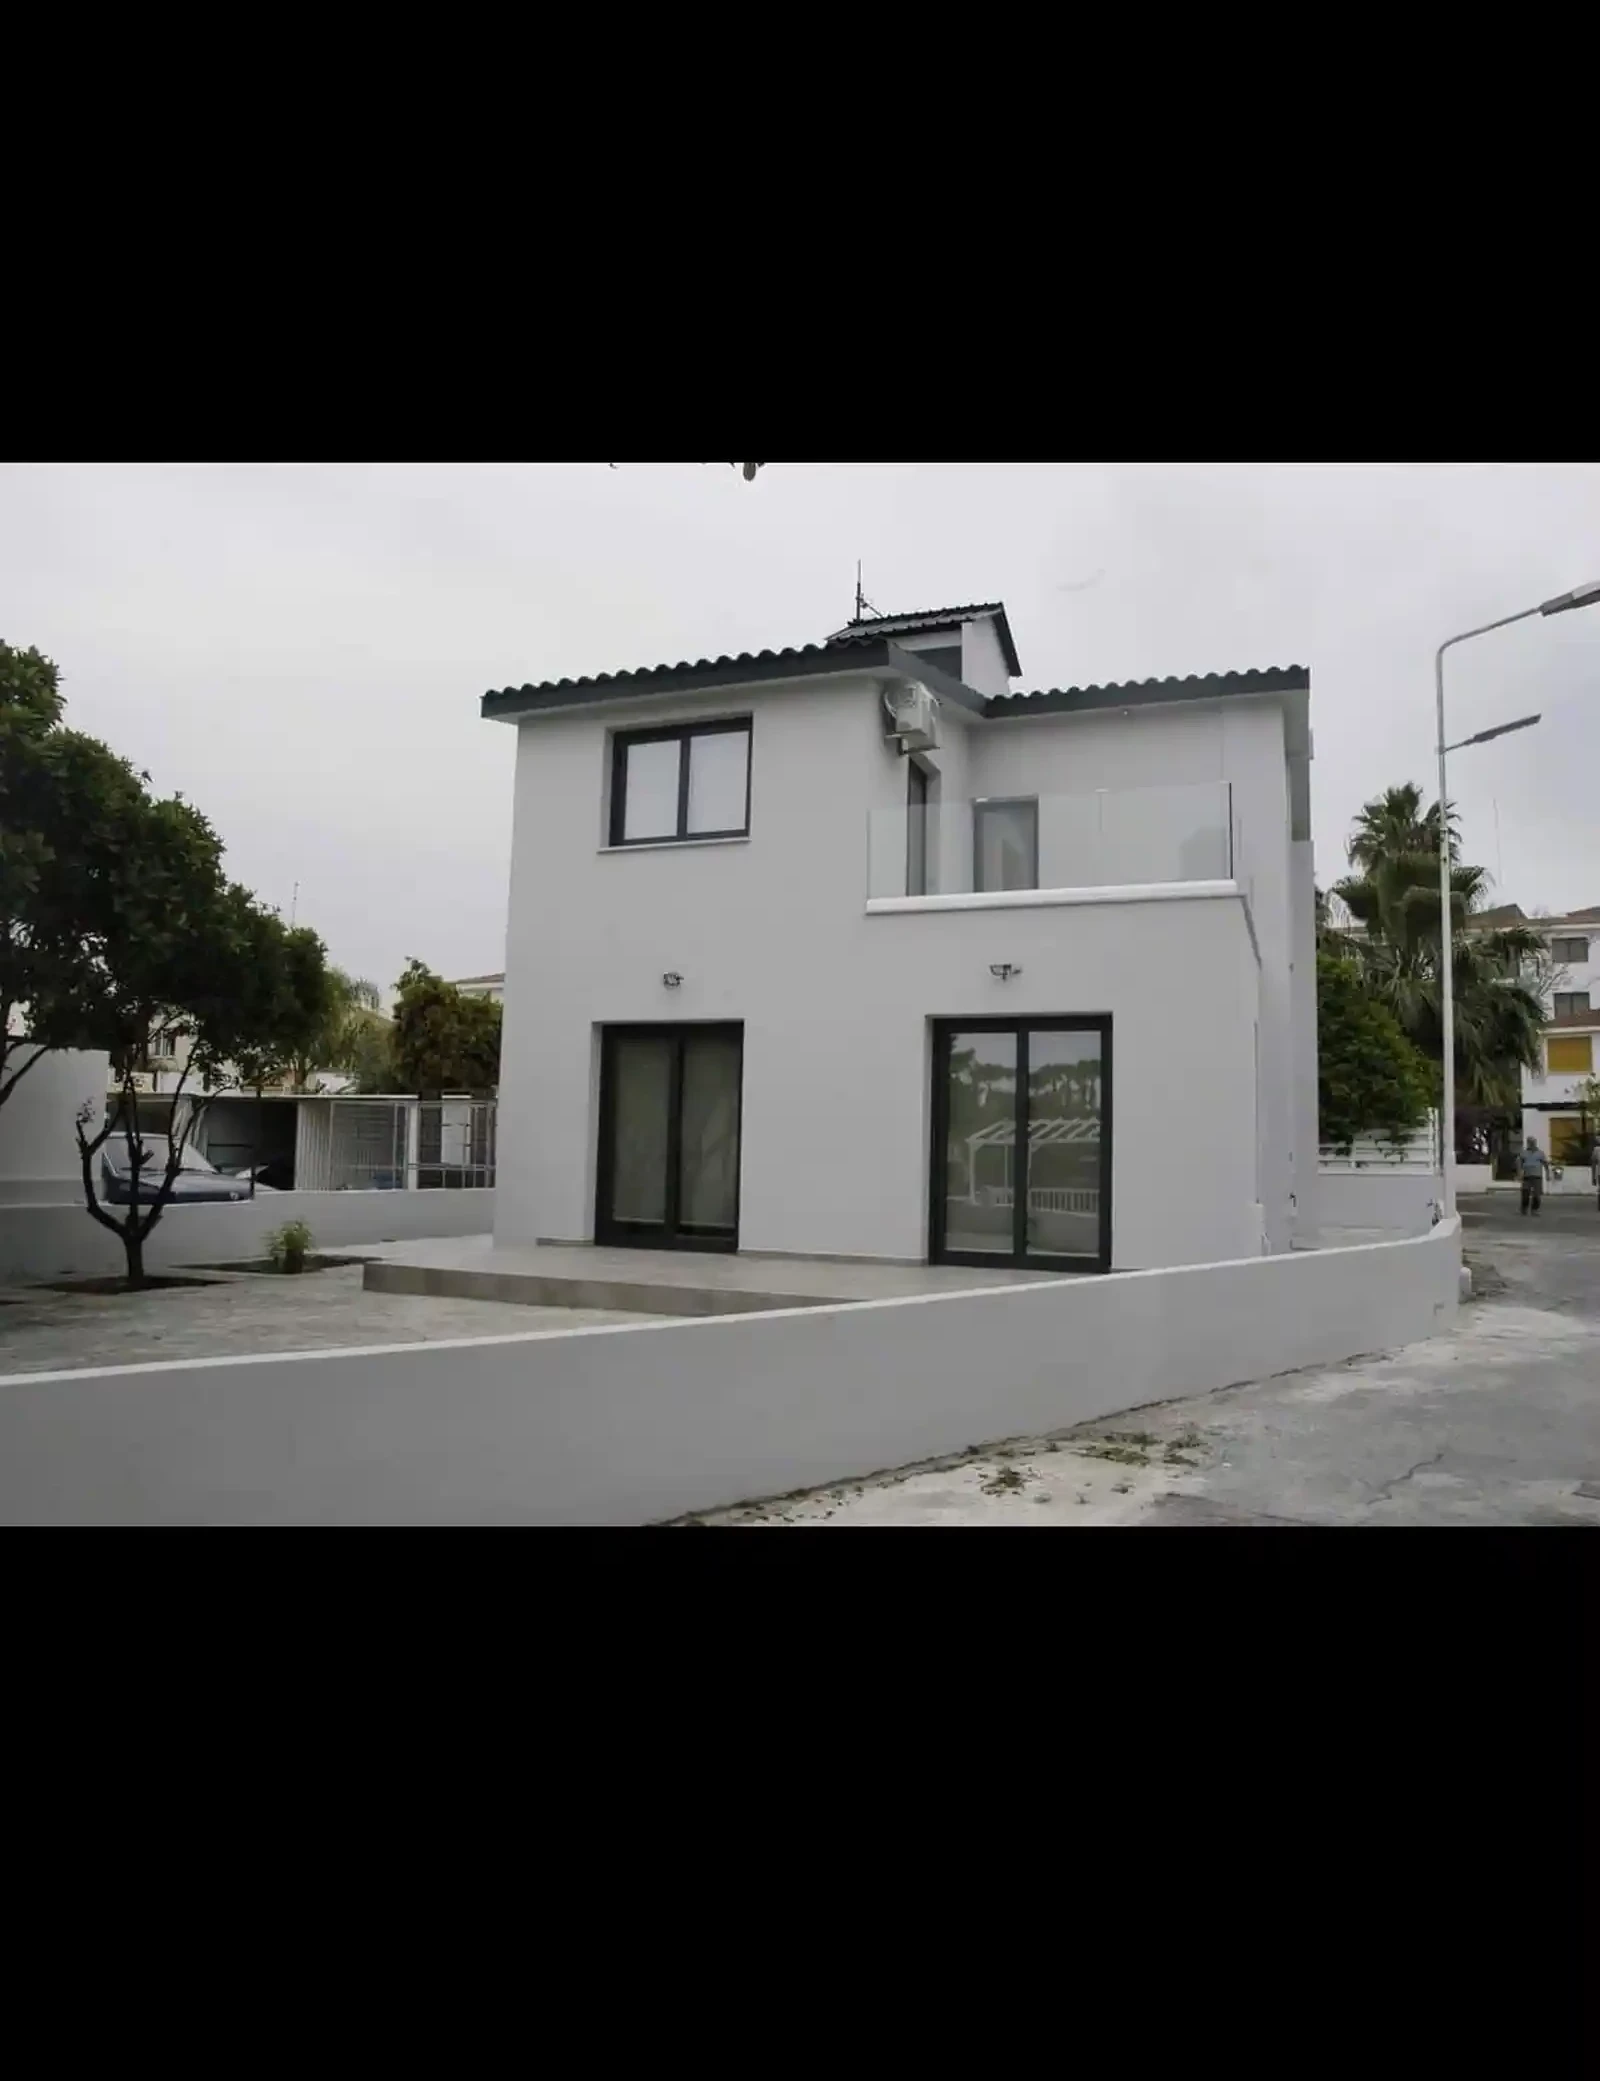 3-bedroom detached house to rent €1.100, image 1